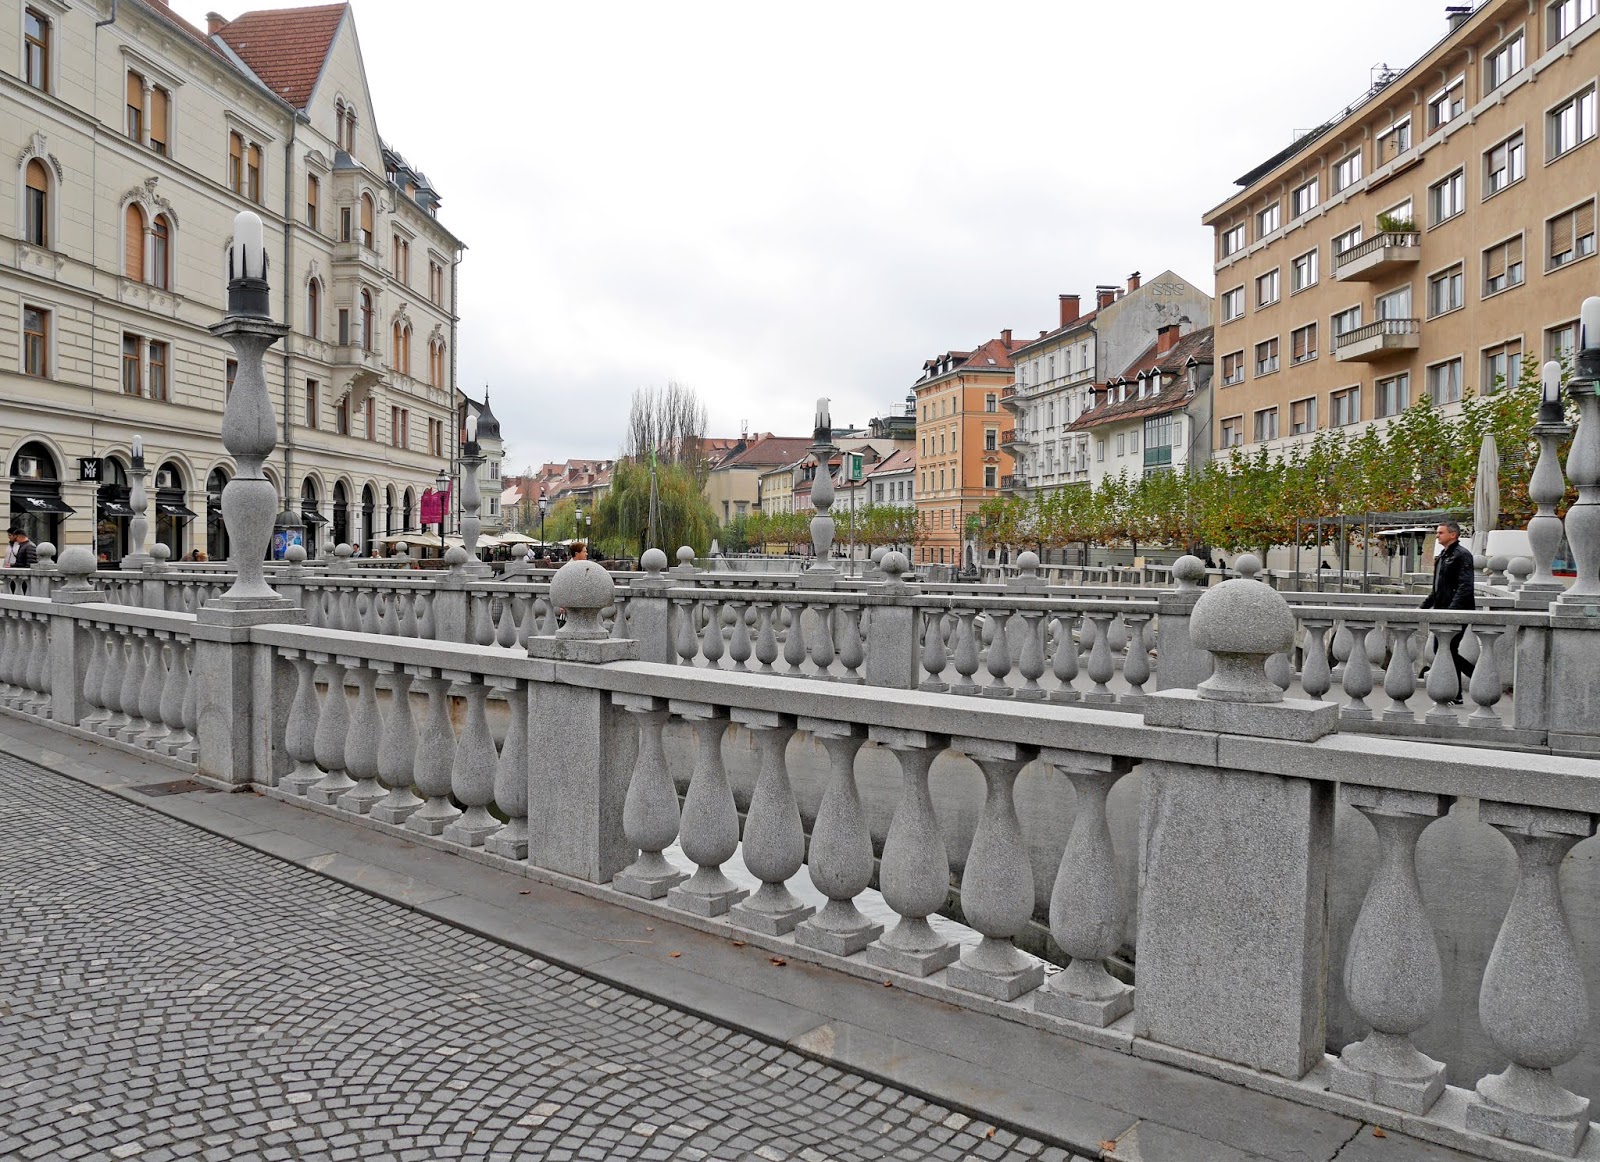 The Triple Bridge, Ljubljana